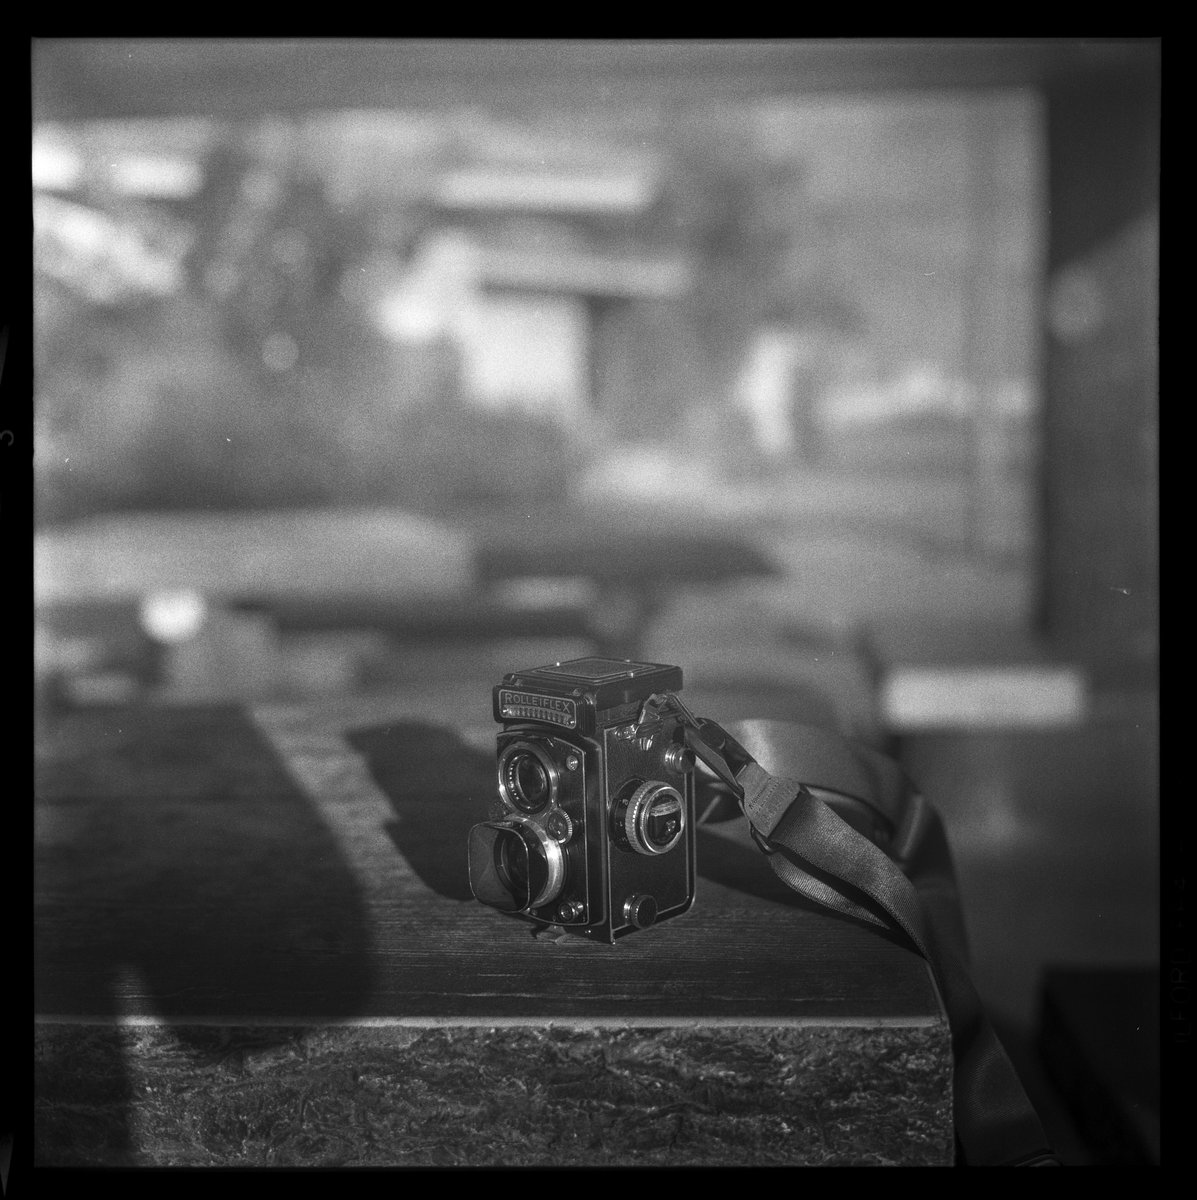 Rolleiflex 2.8C
Carl Zeiss Planar 80mm F2.8
Ilford FP4 Plus(EI100)
Silverchrome Selonal 1+99 60:00 min at 20C°
#ファインダー越しの私の世界 #写真好きな人と繋がりたい